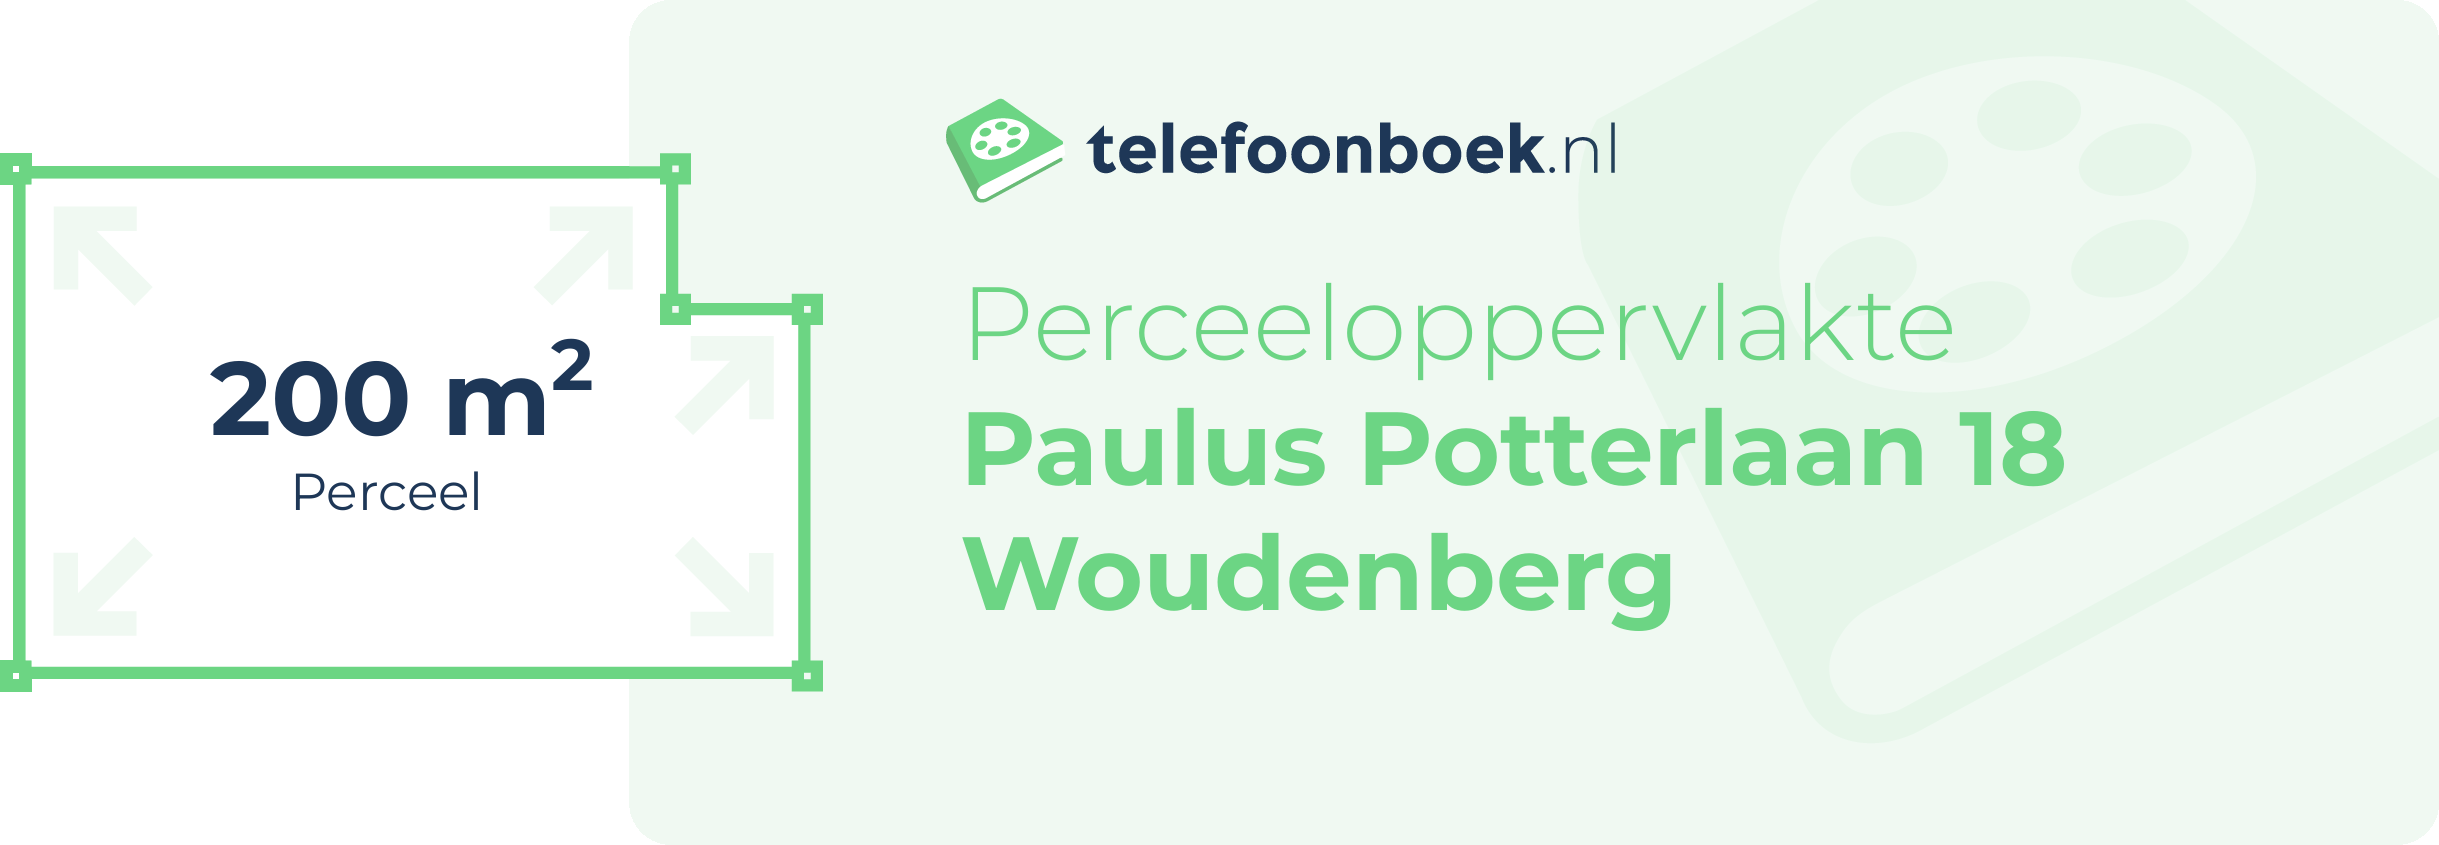 Perceeloppervlakte Paulus Potterlaan 18 Woudenberg